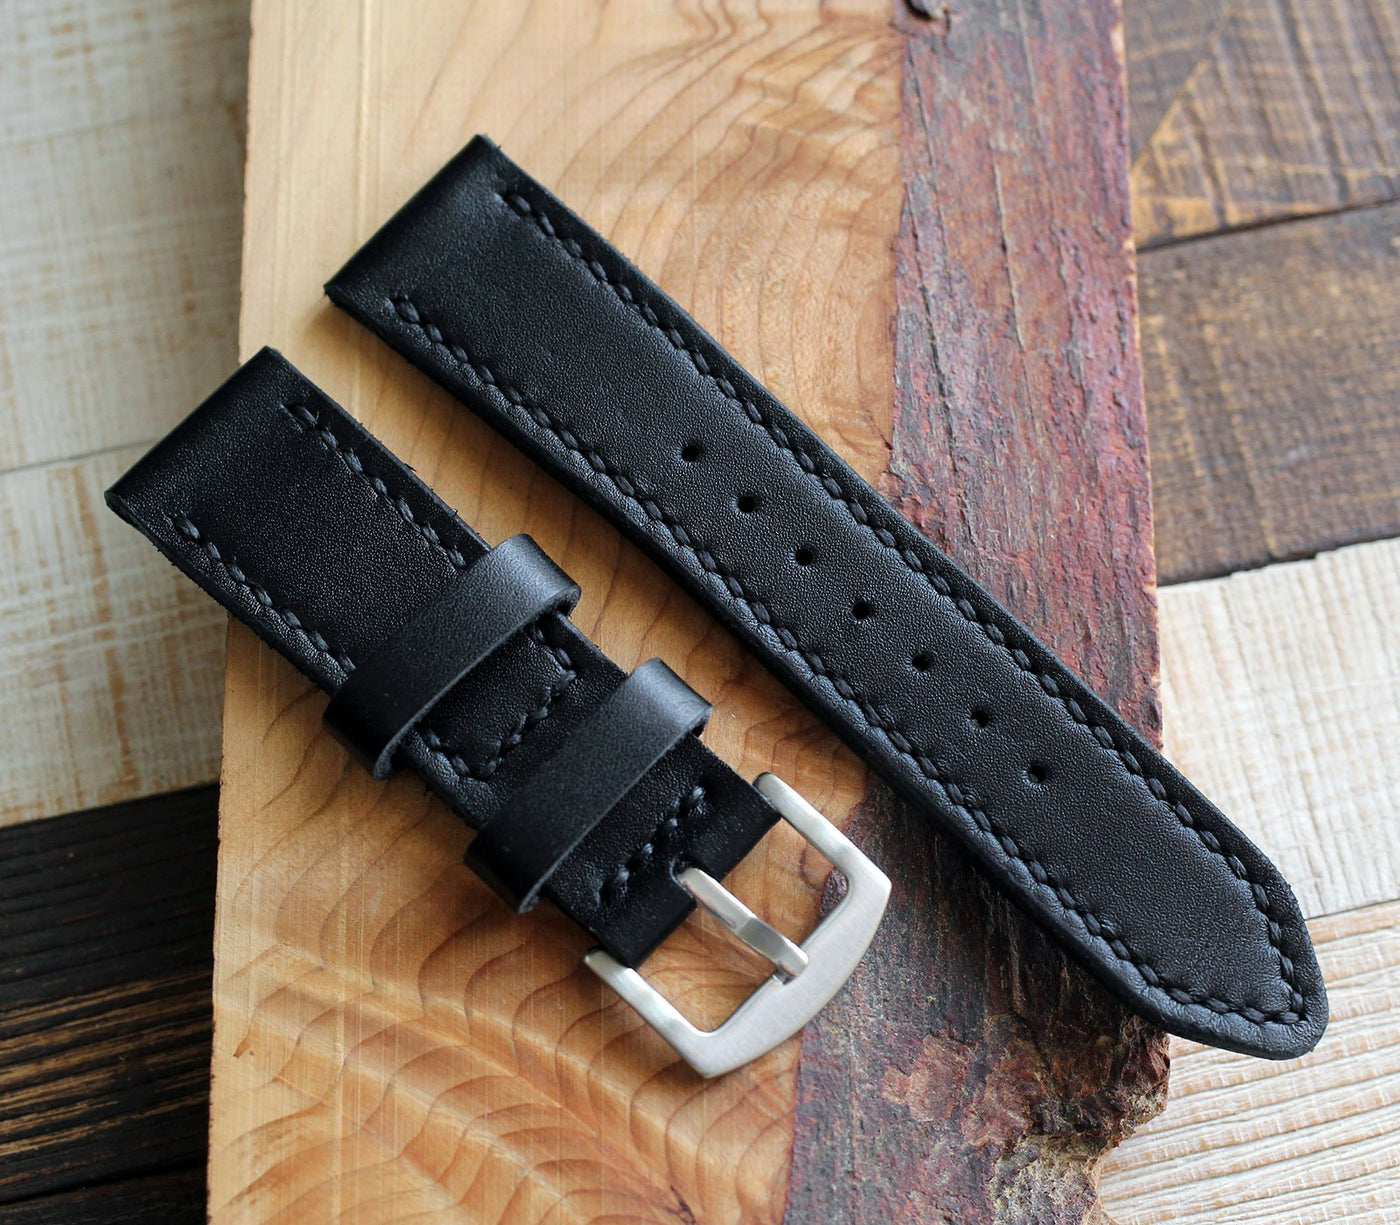 Custom Made Leather Watch Strap - Black